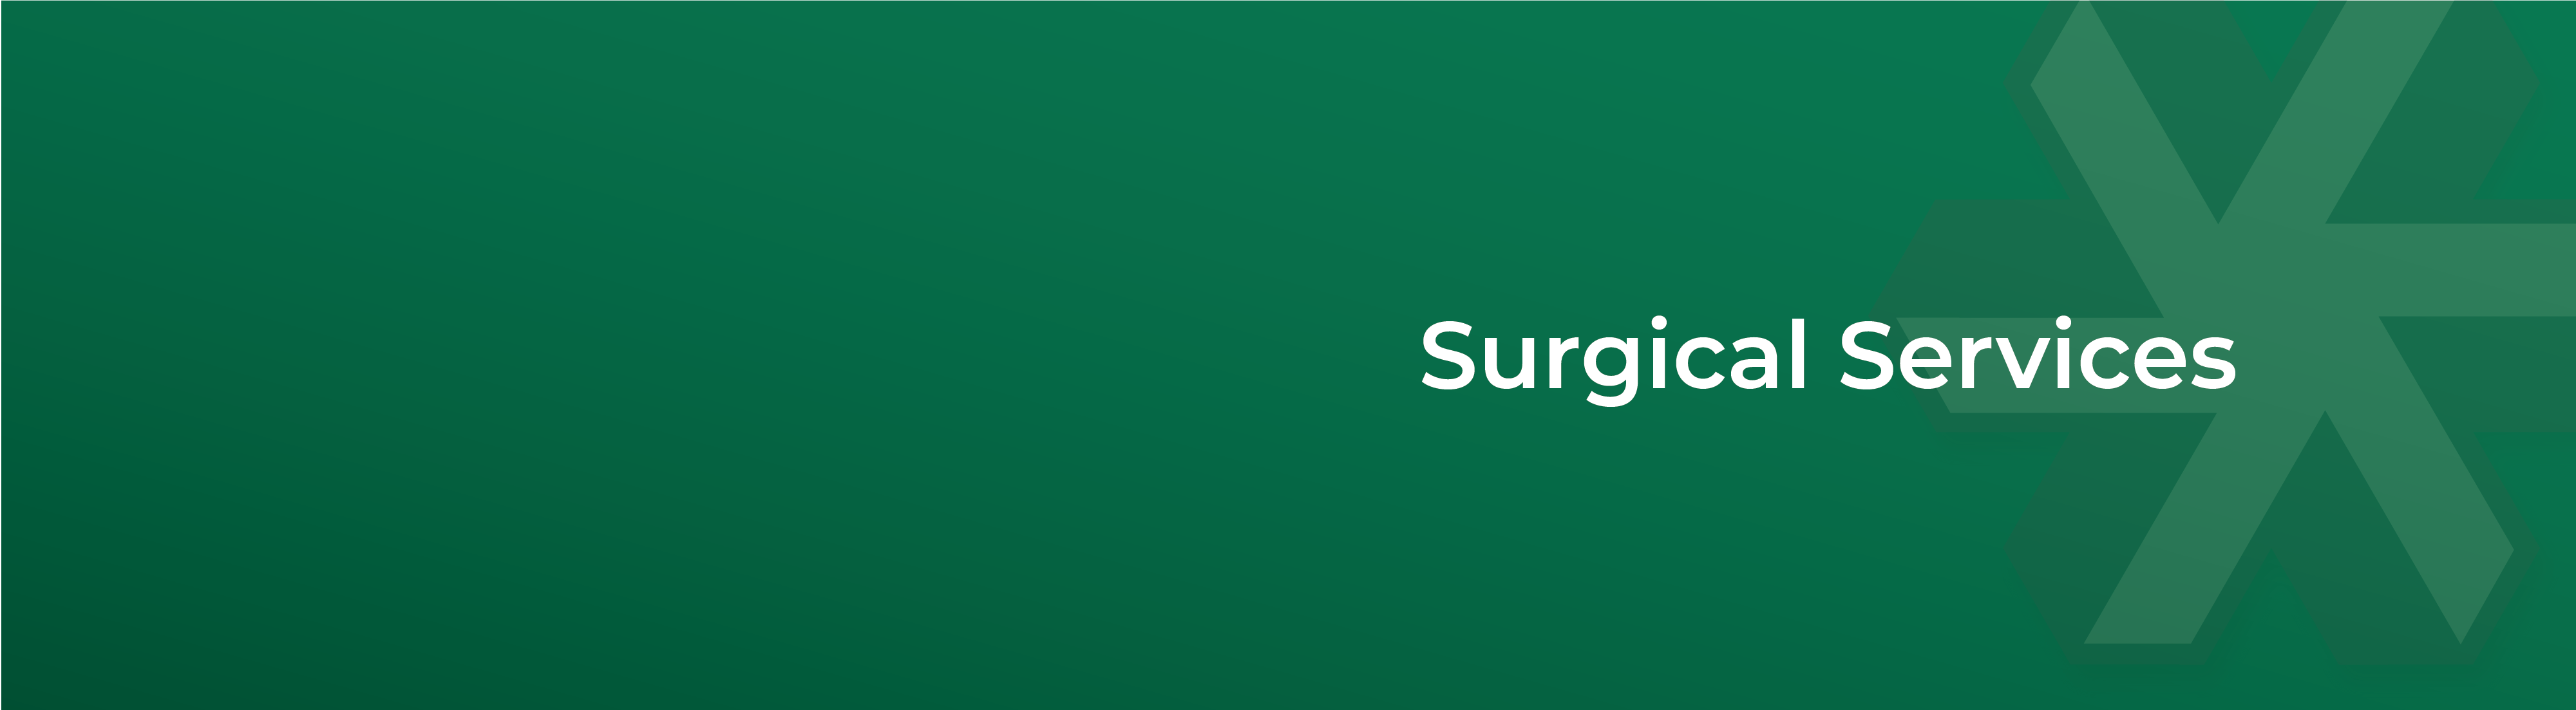 Surgery Services